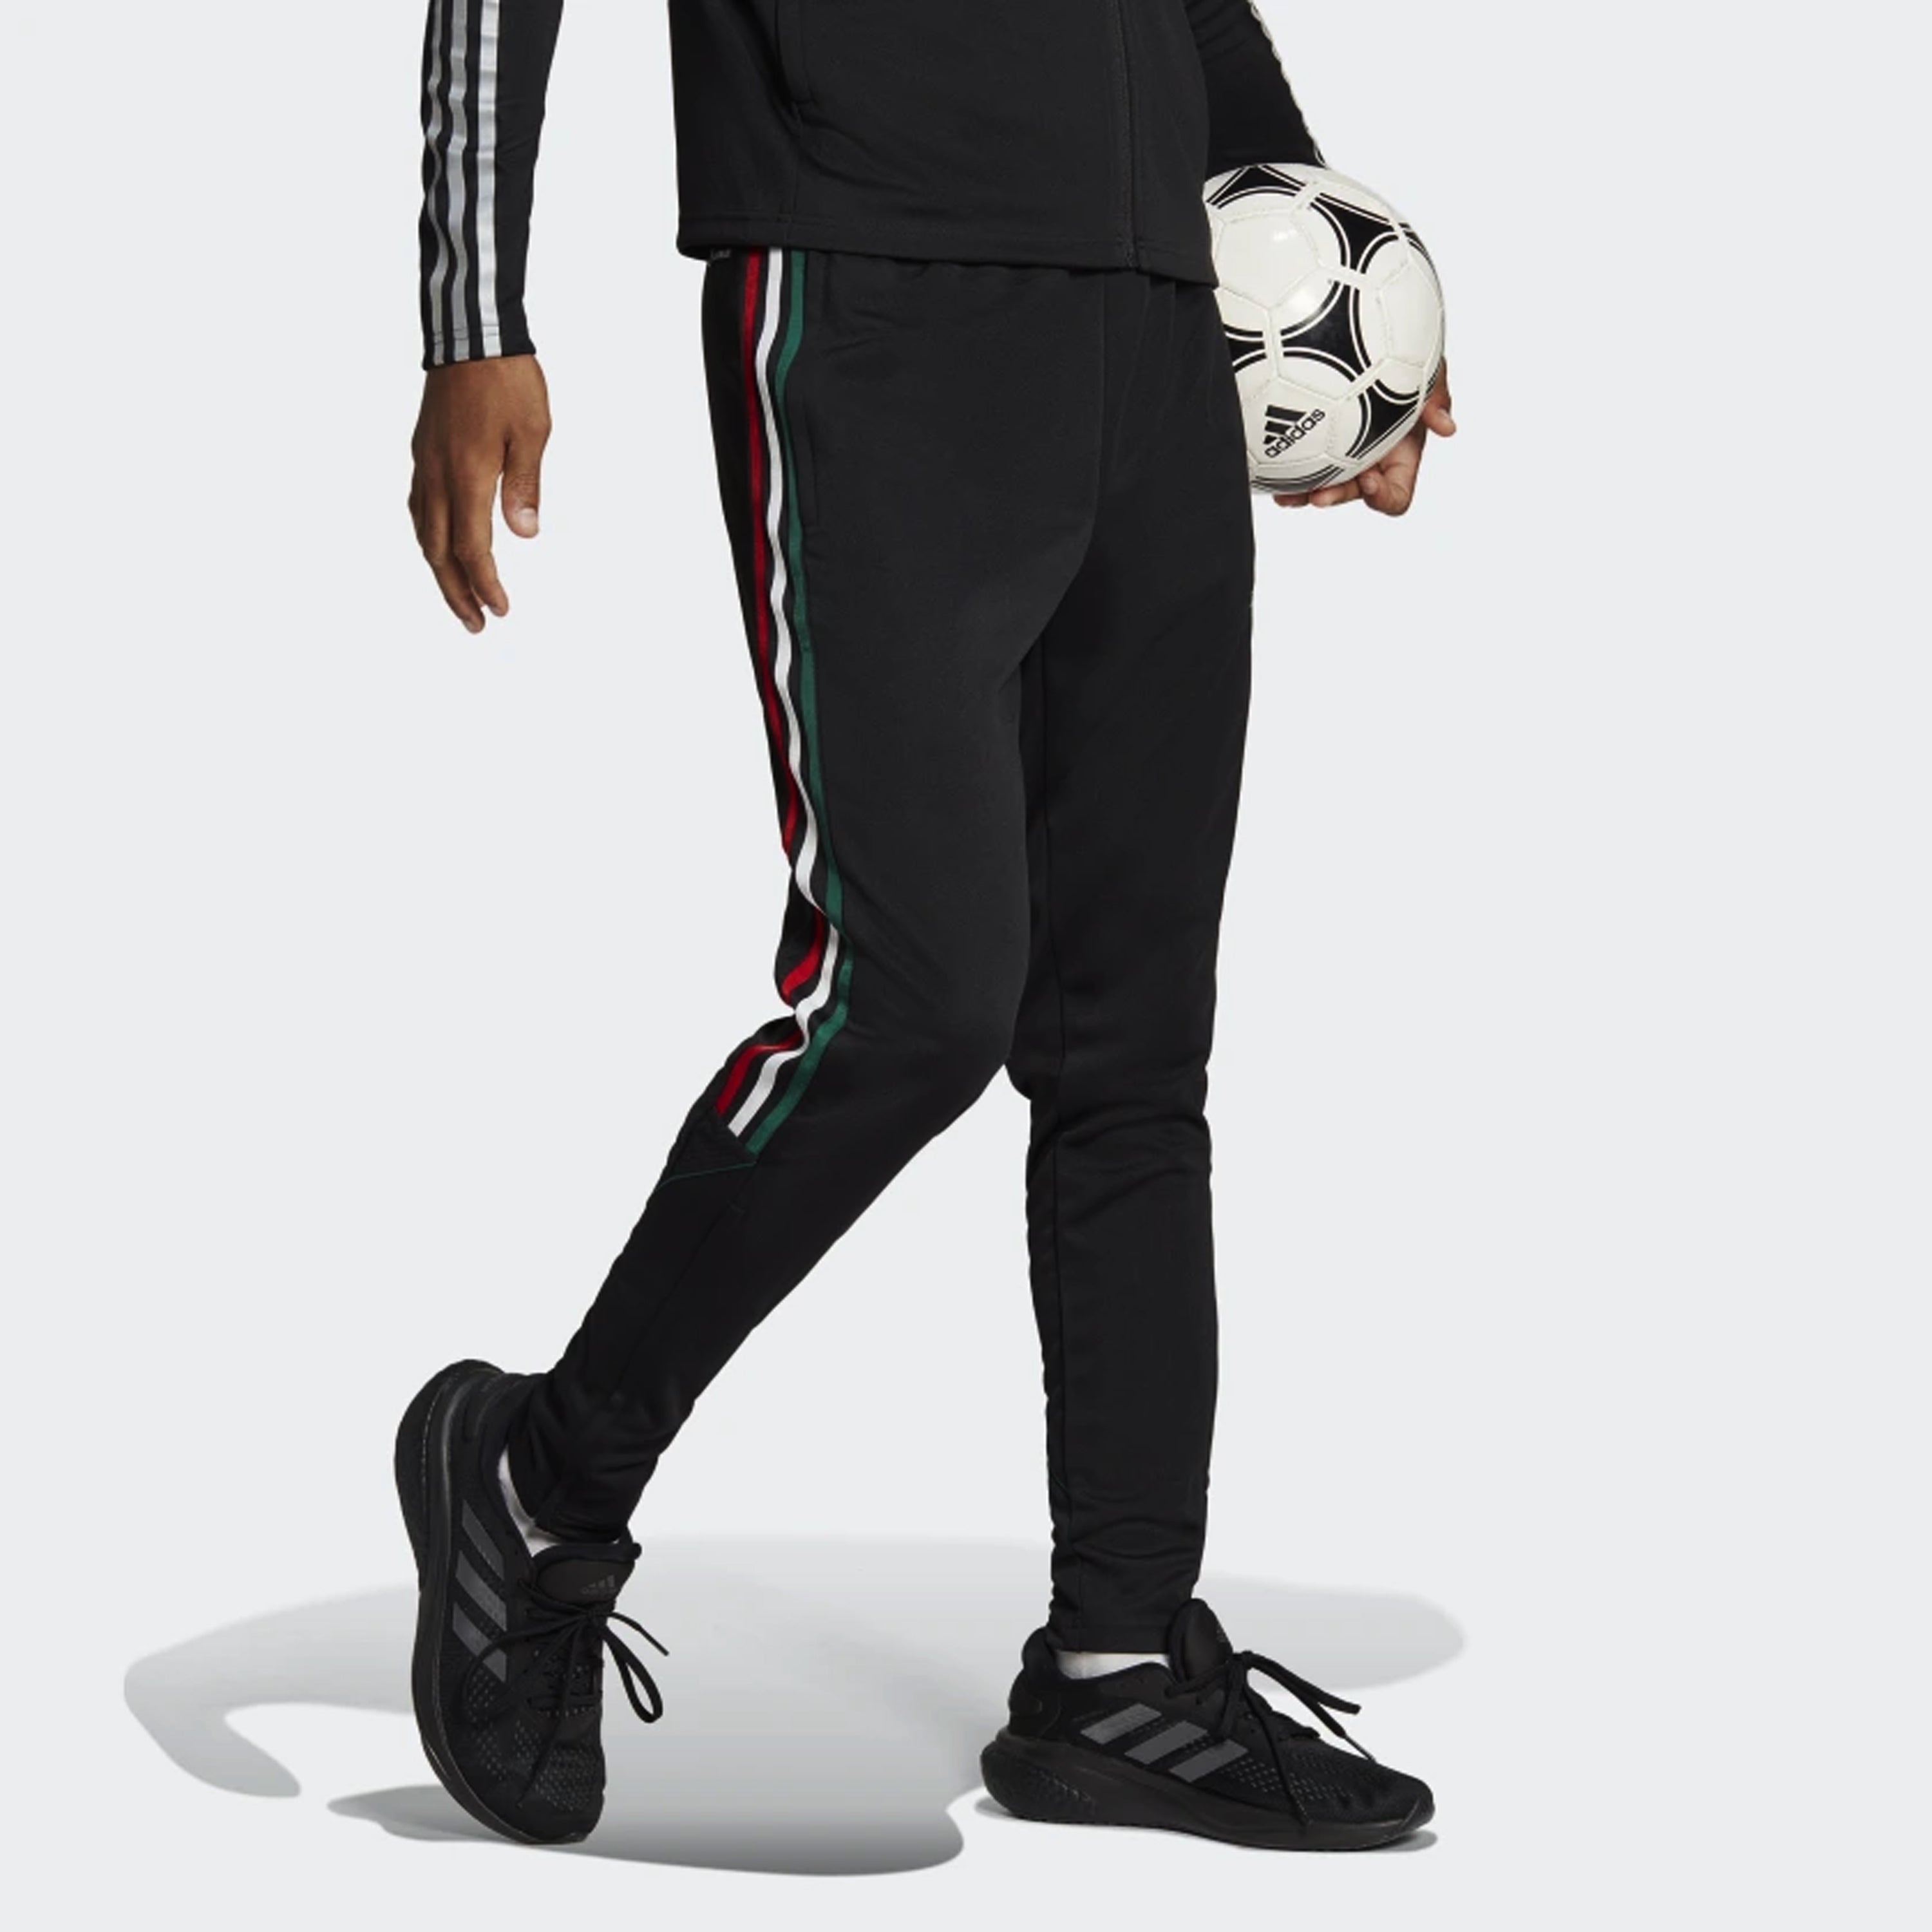 Adidas Men's Tiro Training Pants Track/Soccer Pant Multiple Colors & Sizes  